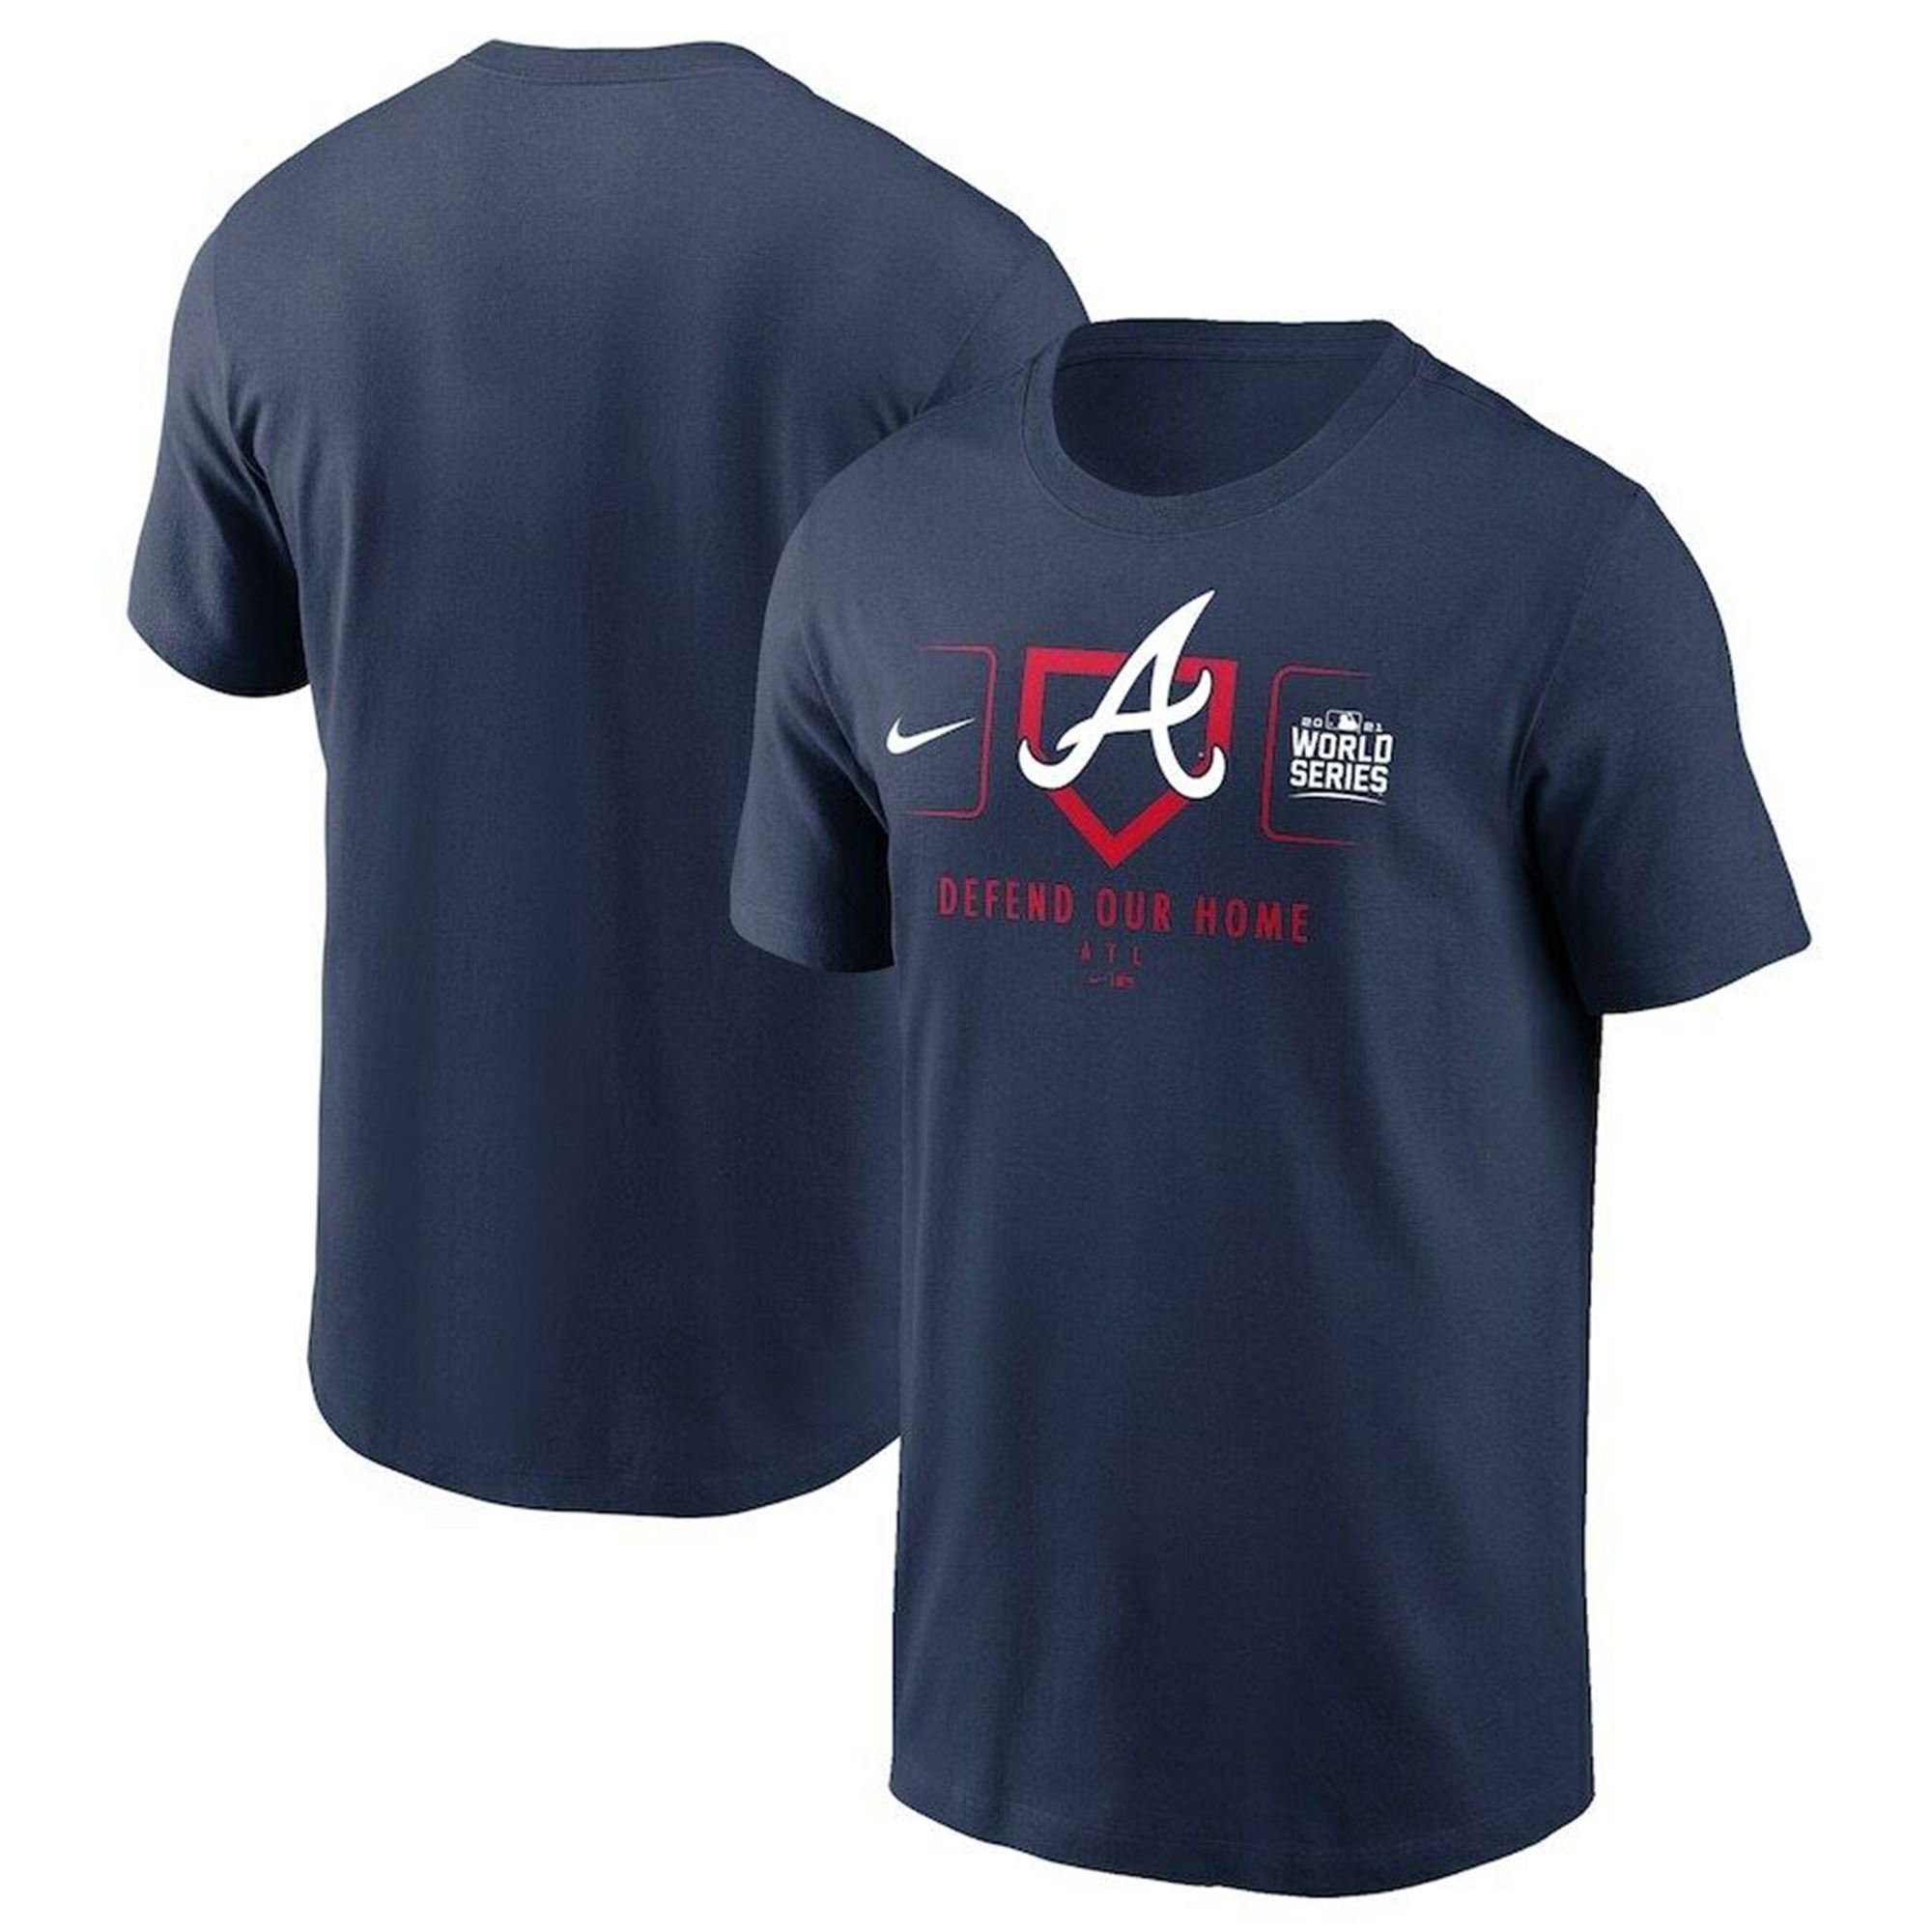 Atlanta Braves 2021 Mlb World Series Champions Defend Our Home T-shirt